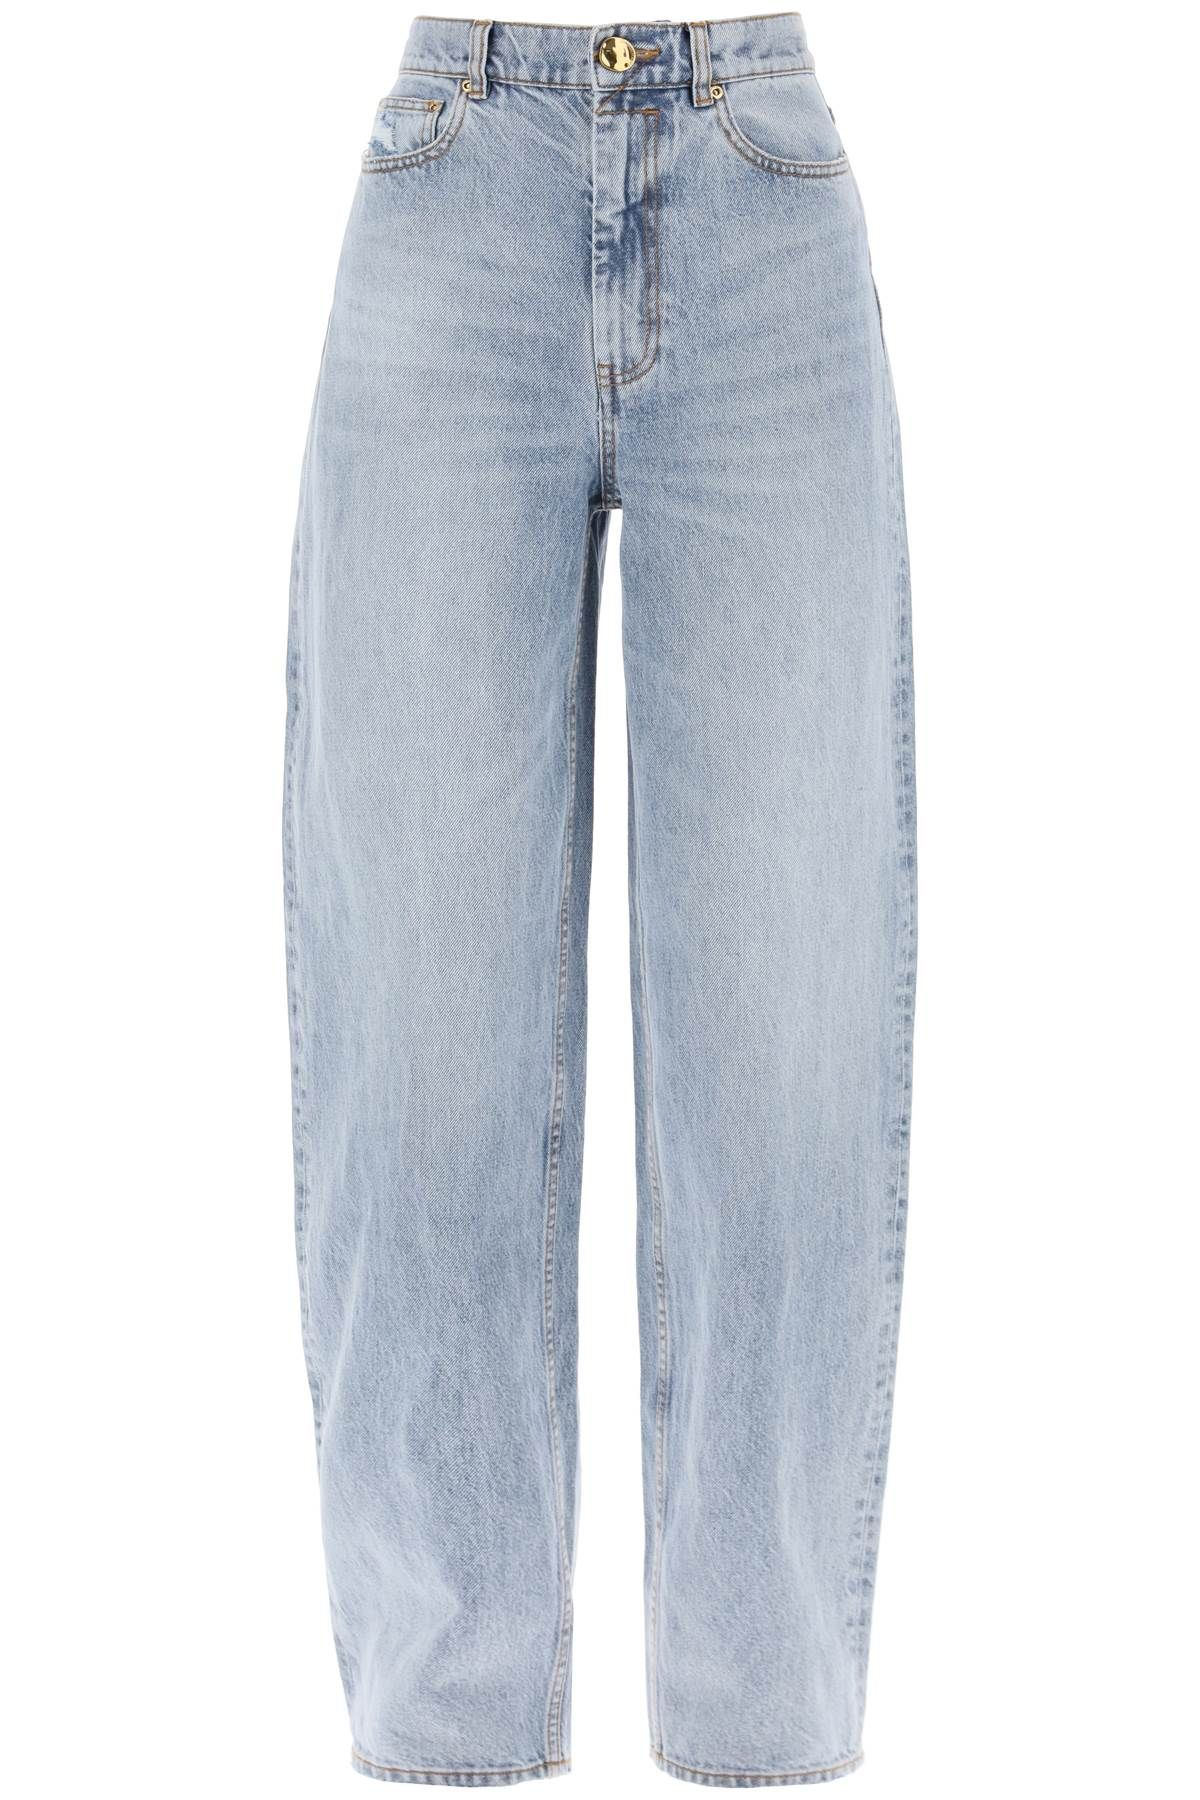 Shop Zimmermann "curved Leg Natural Jeans For In Light Blue